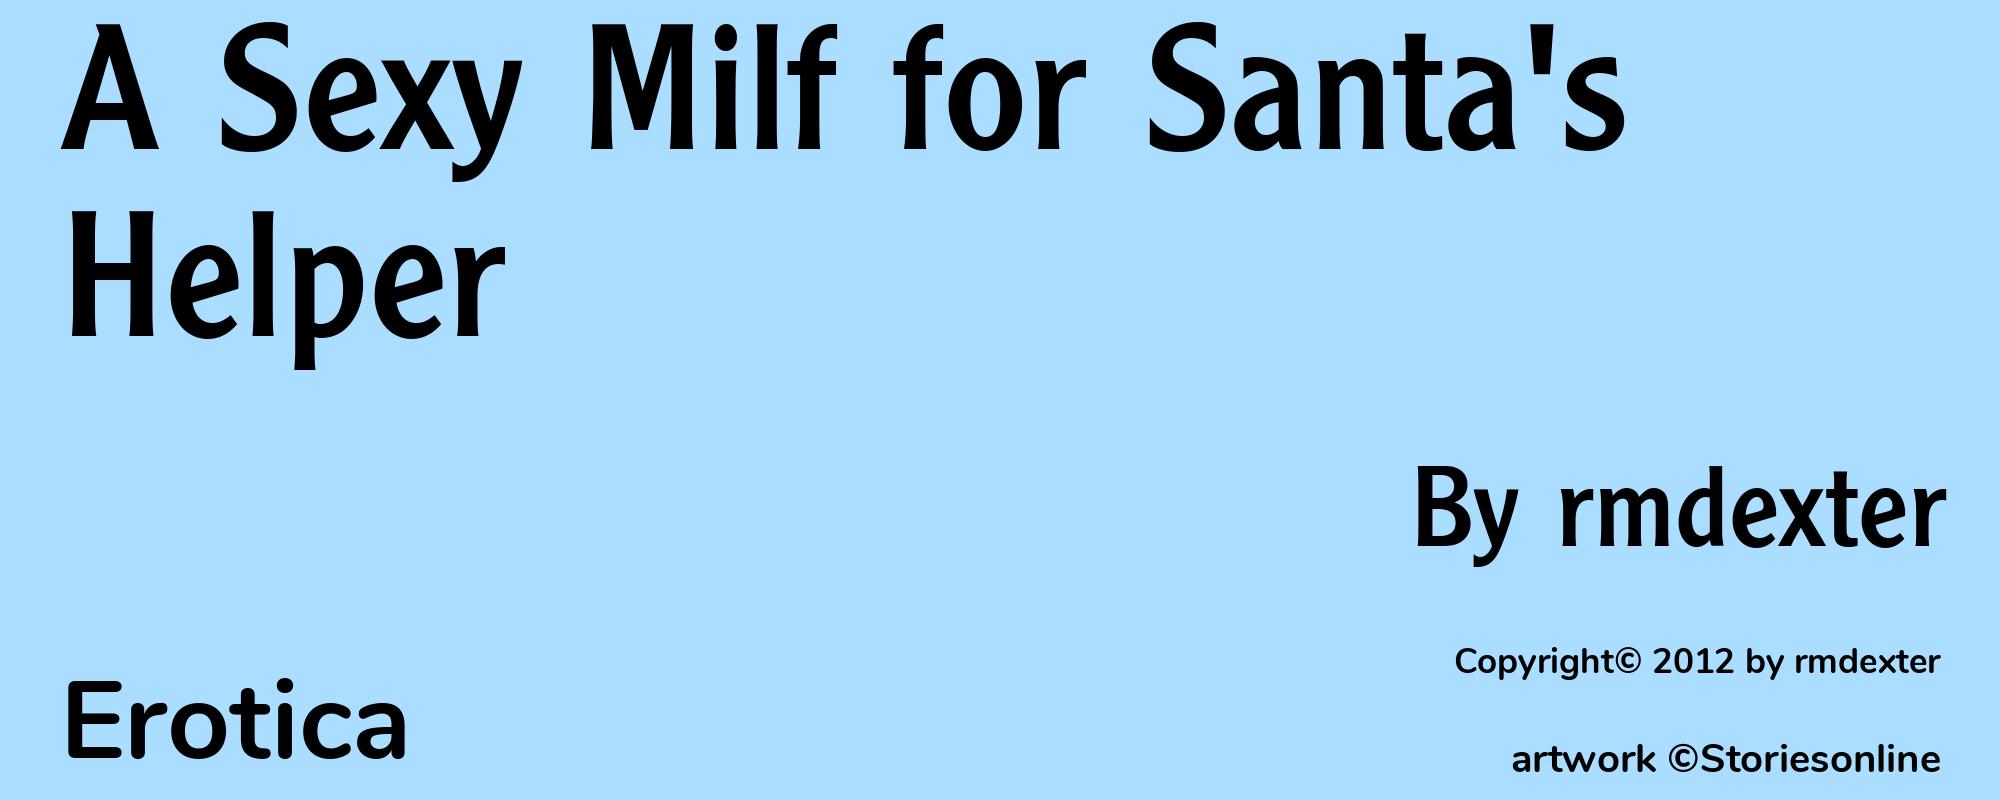 A Sexy Milf for Santa's Helper - Cover